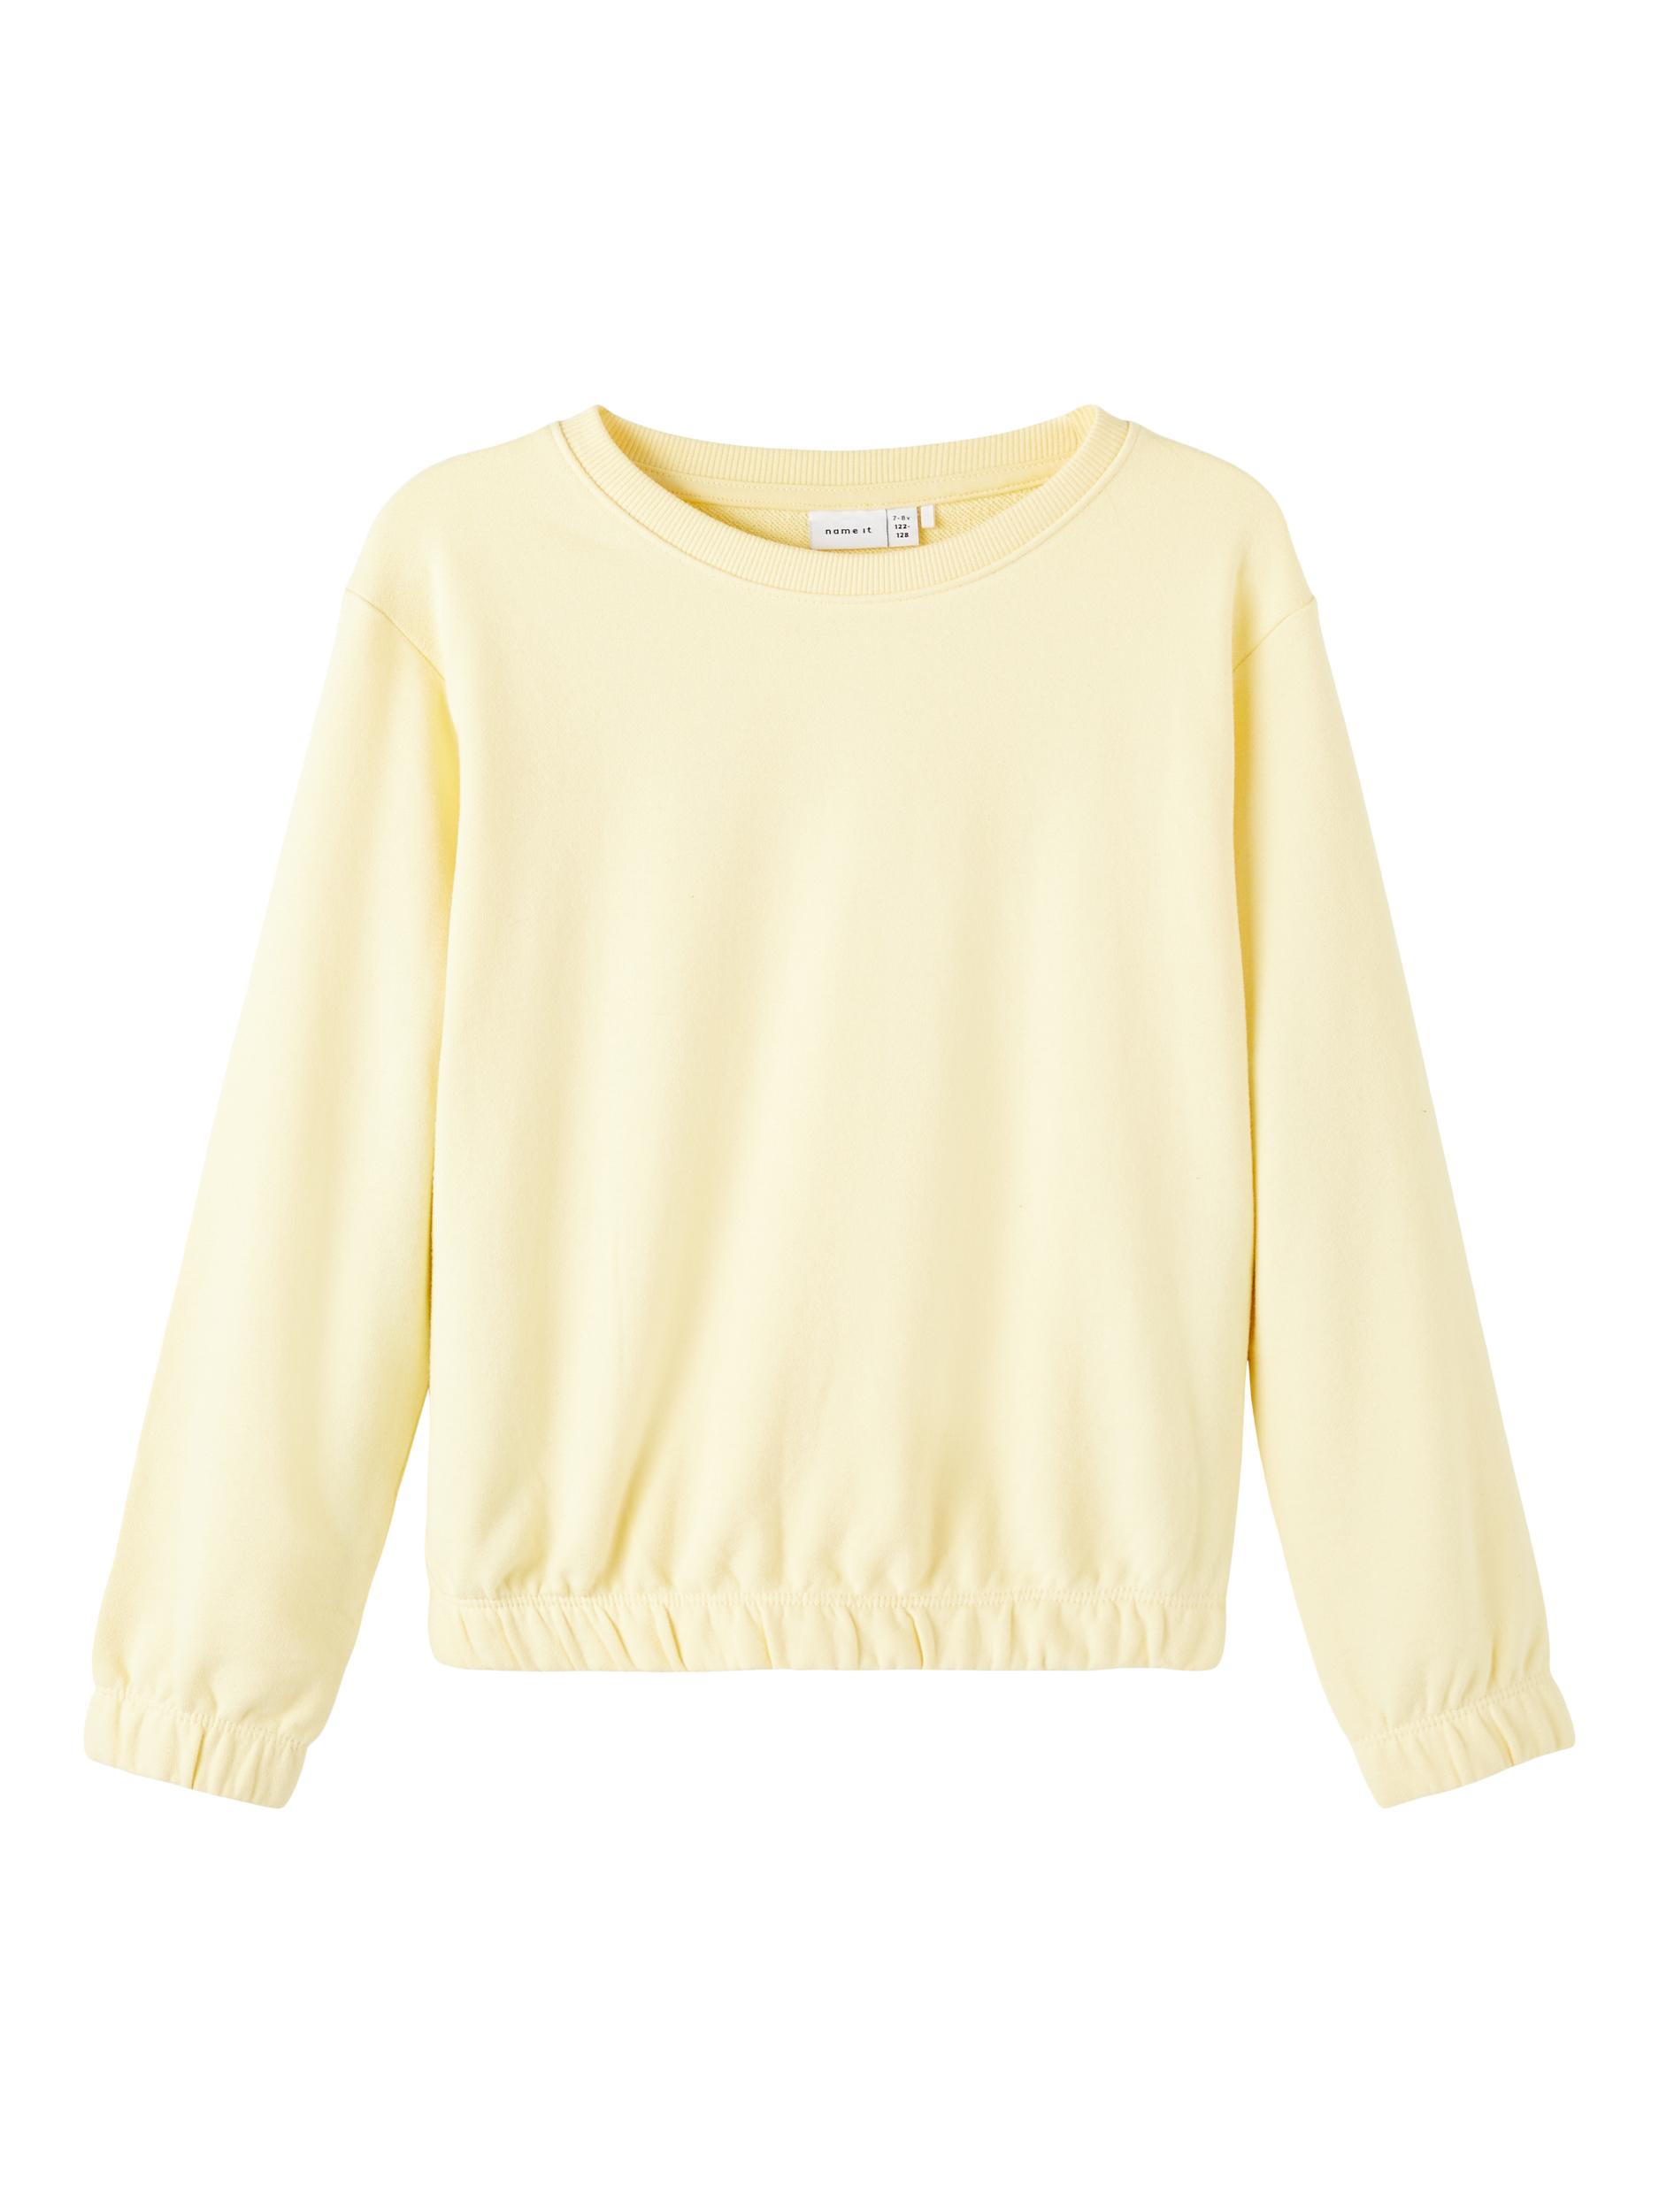 Sweatshirt, Double Cream, 122-128 cm